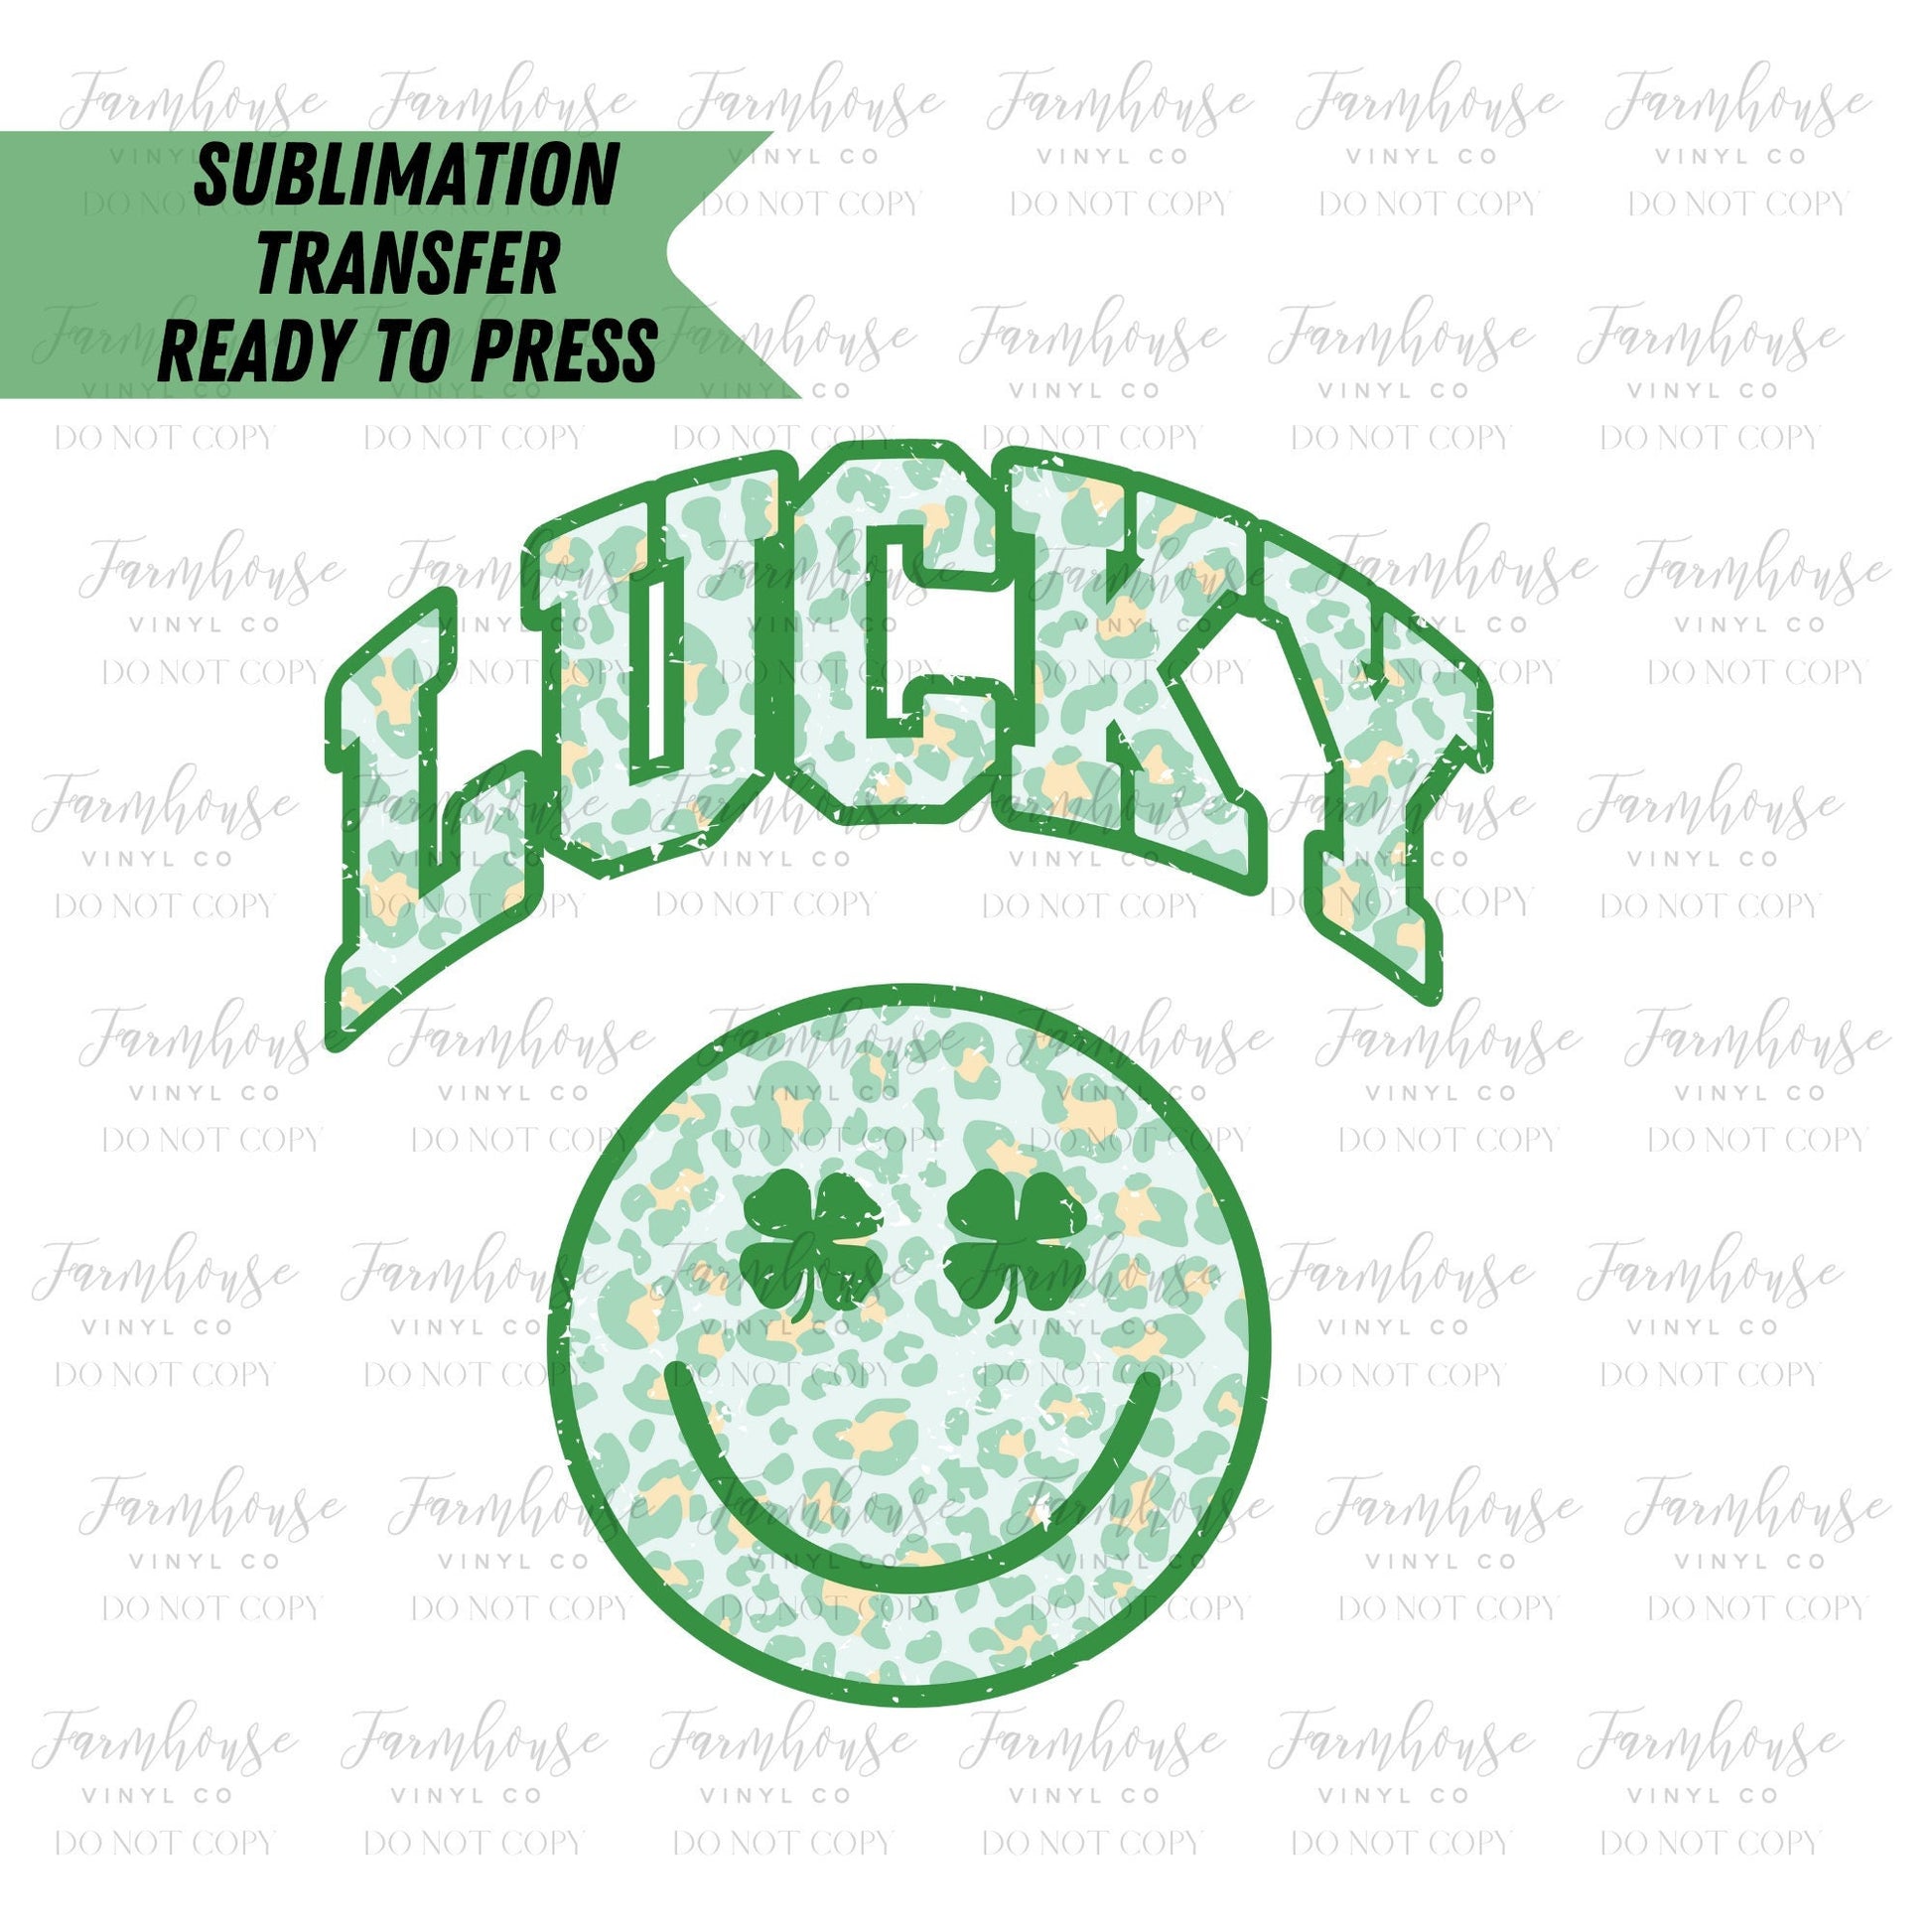 Lucky Shamrock Smiley Face BOHO, Ready To Press, Sublimation Transfers, Sublimation Prints, Transfer Ready To Press, St Patrick Day - Farmhouse Vinyl Co